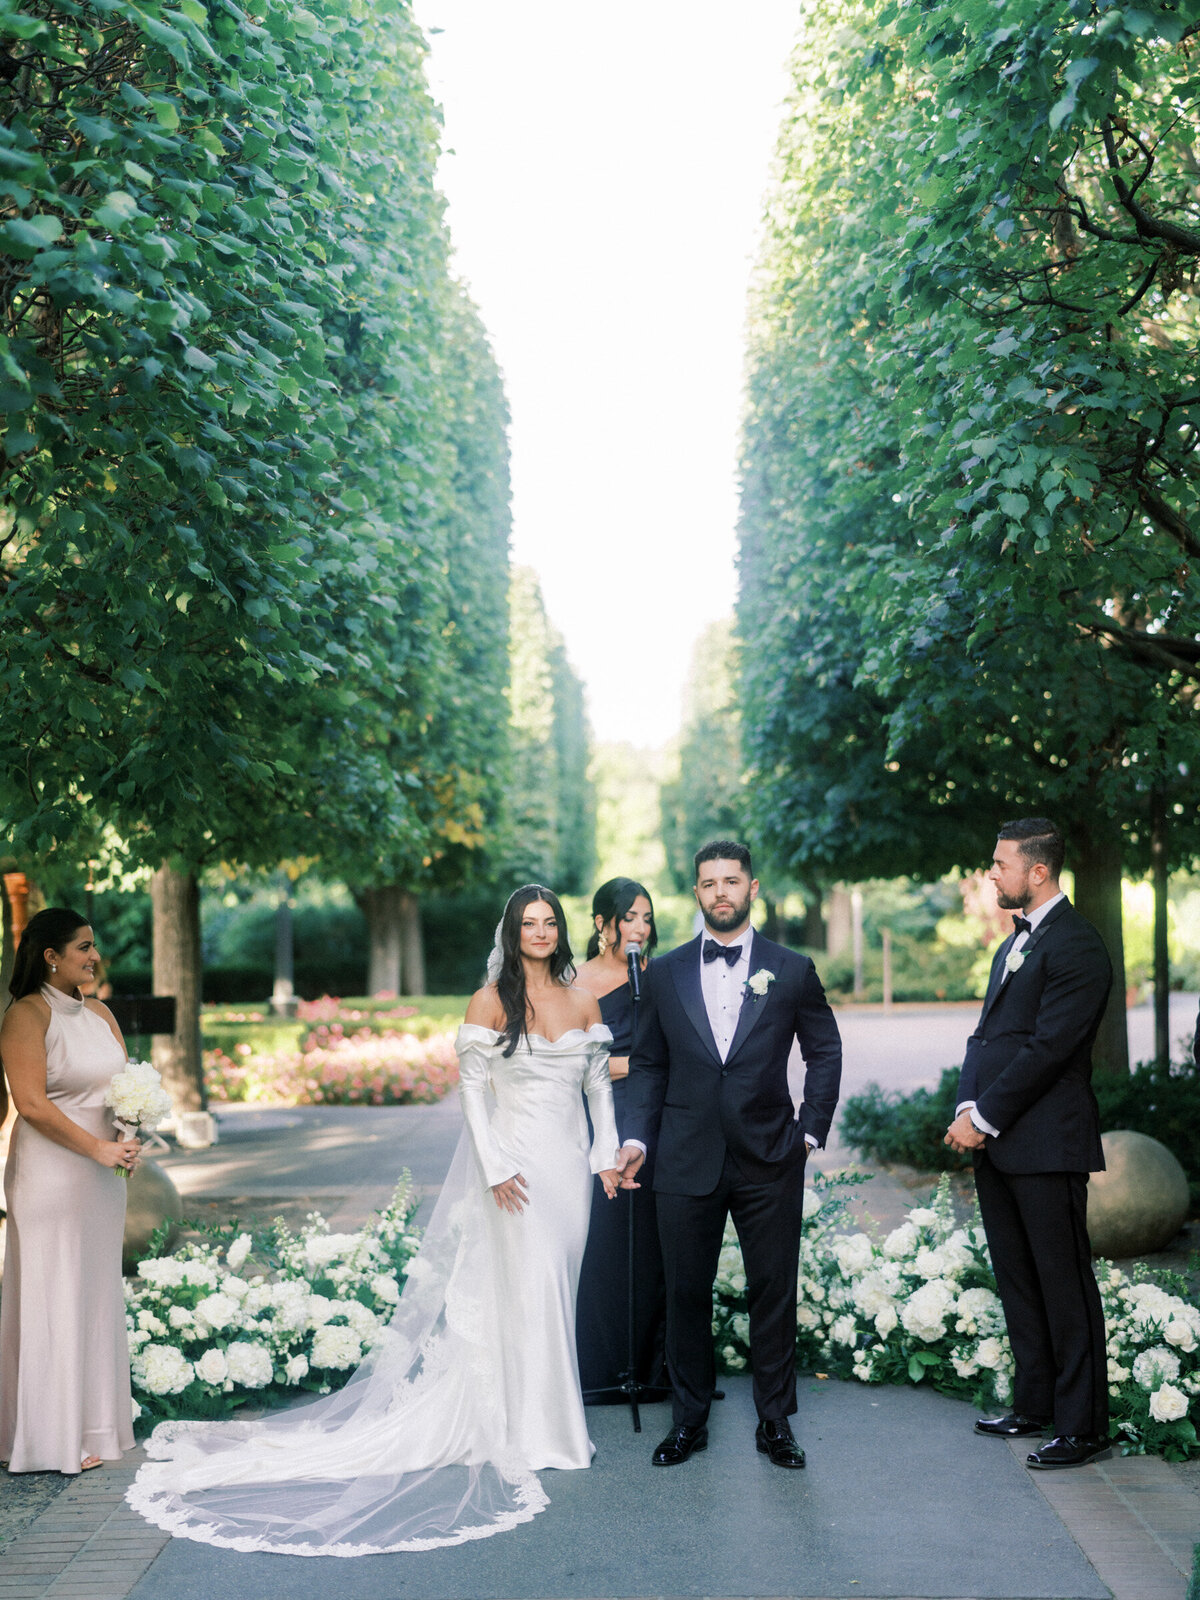 Summer Chicago Botanic Gardens Wedding Highlights | Amarachi Ikeji Photography 104